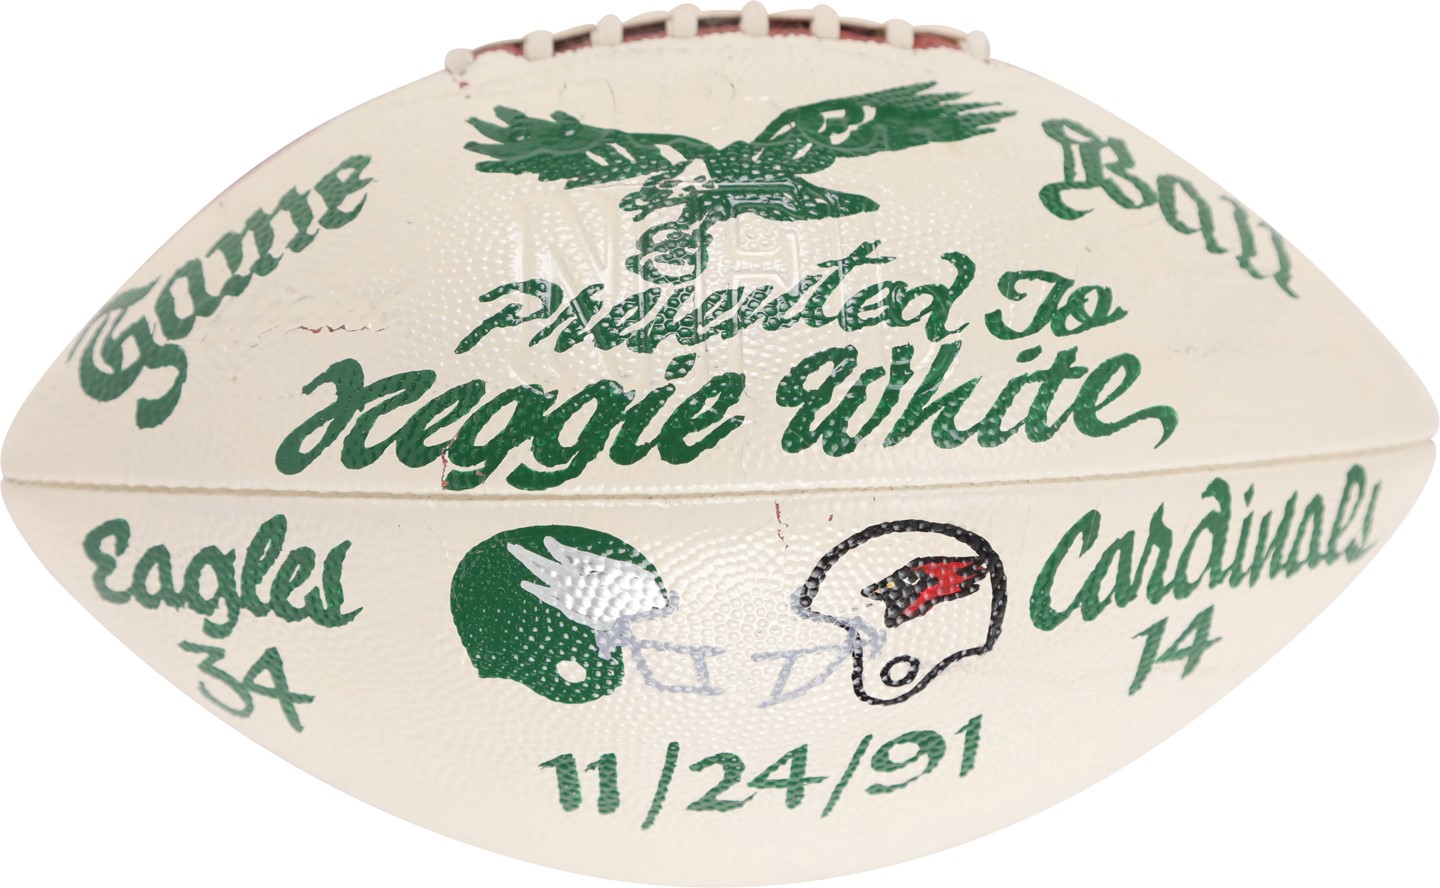 - Reggie White November 24, 1991, Philadelphia Eagles Presentational Game Ball from the Reggie White Collection (Family LOA)